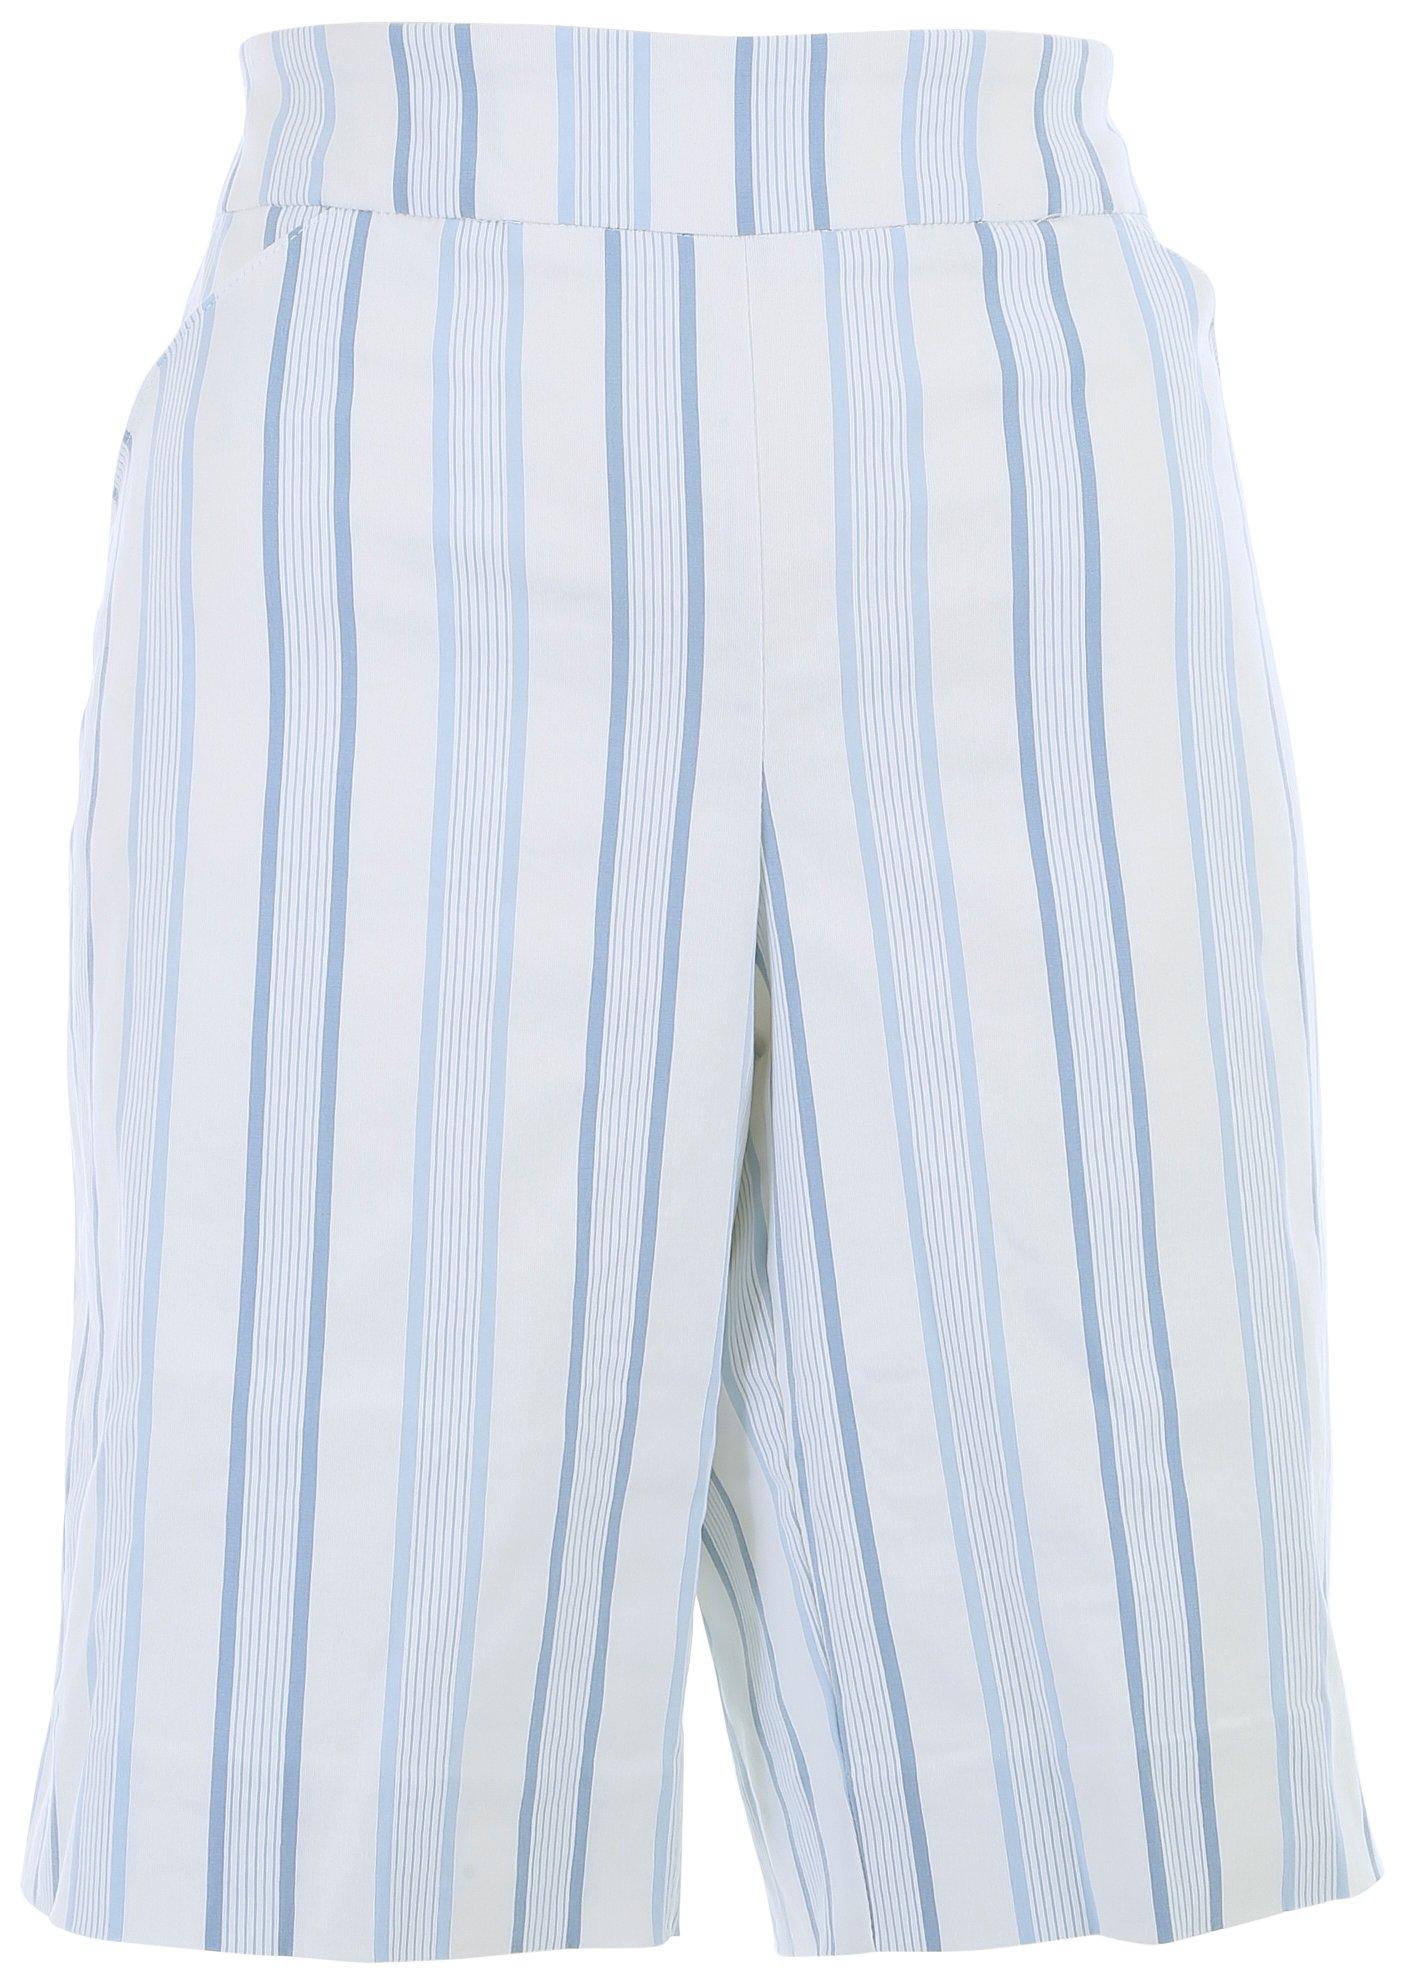 Womens Stripes Bermuda Shorts